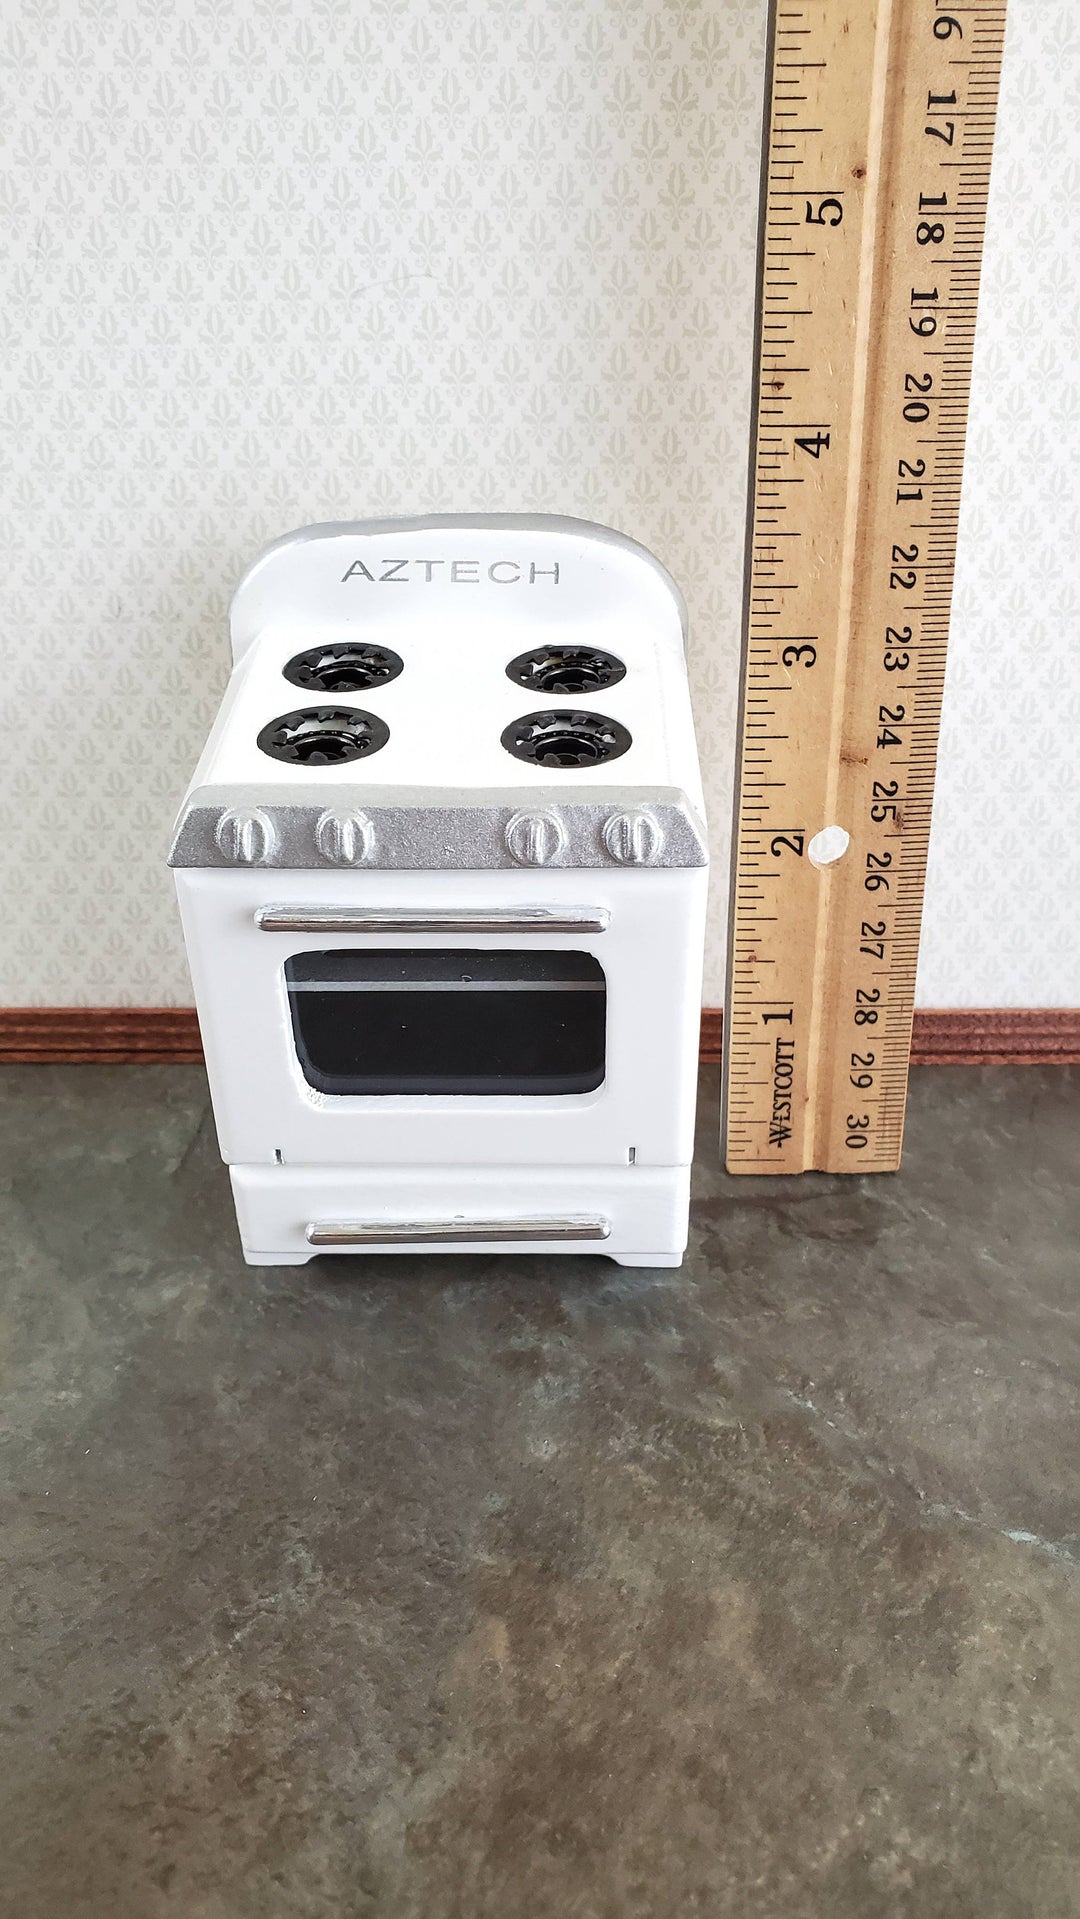 Dollhouse Miniature Kitchen Oven Stove 1950s Style AZTEC 1:12 Scale White